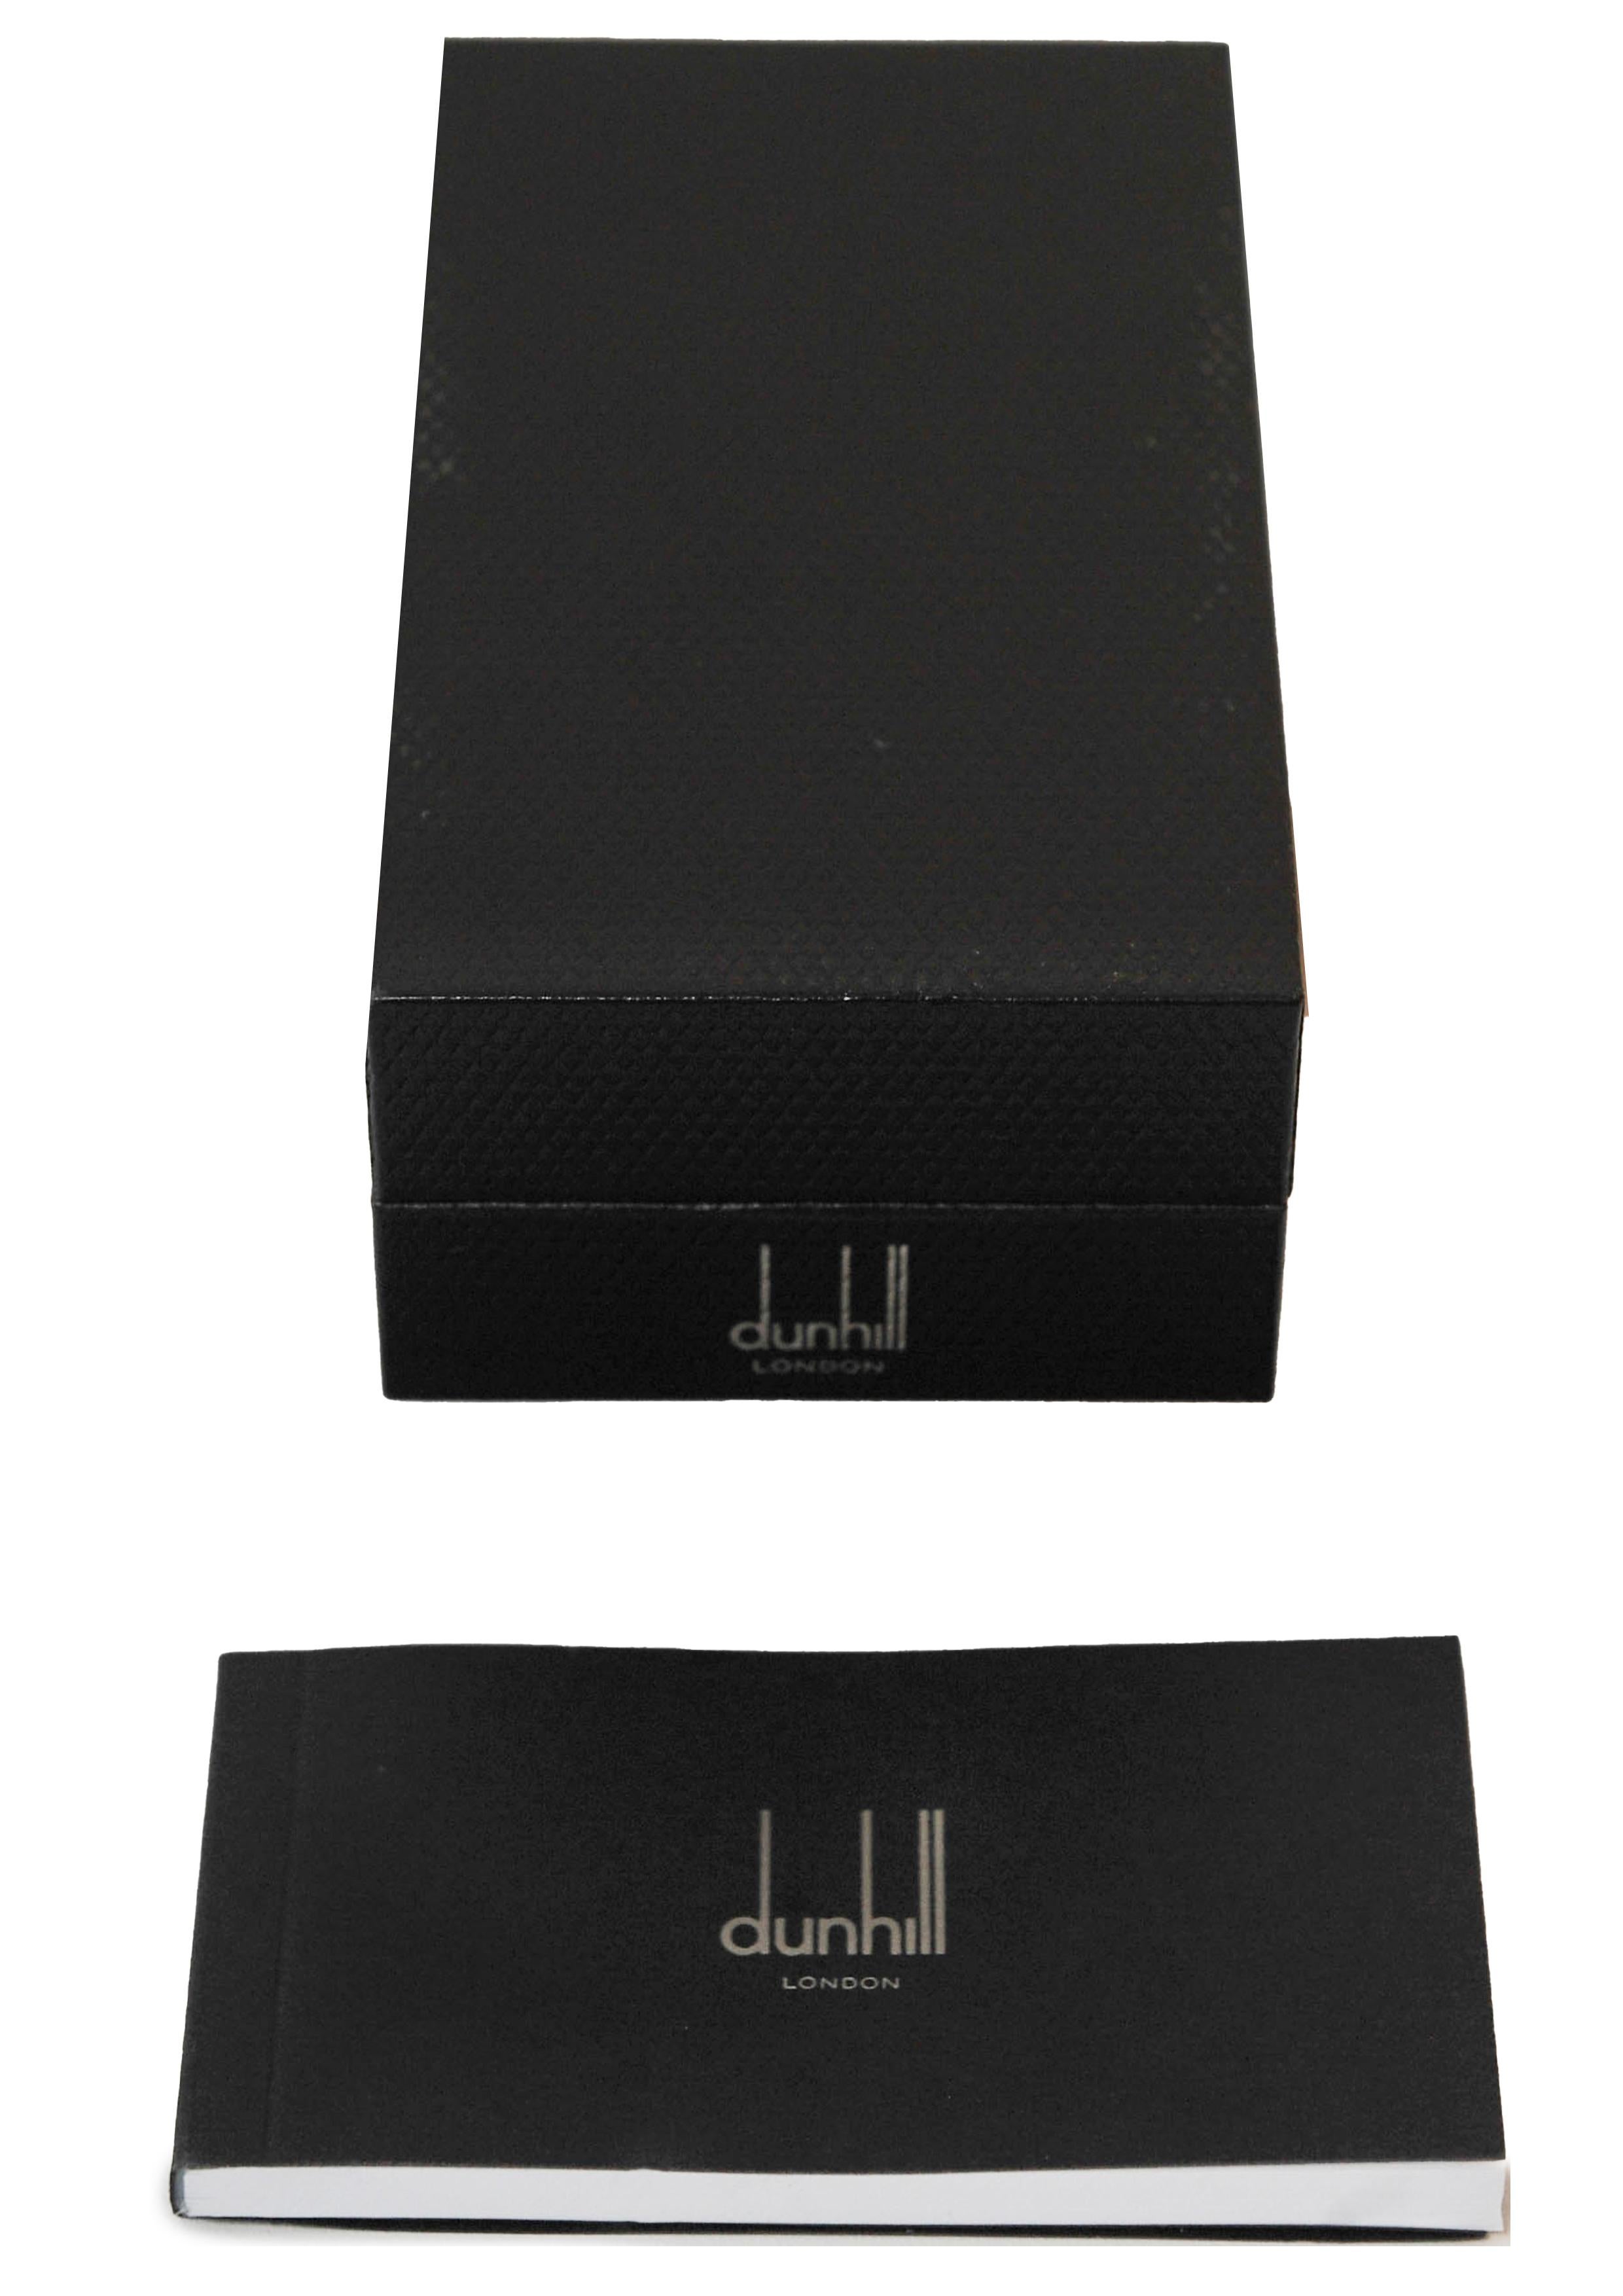 Dunhill of London Longtail Logo Rollgas Zigarettenfeuerzeug mit Dunhill-Schachtel im Angebot 3